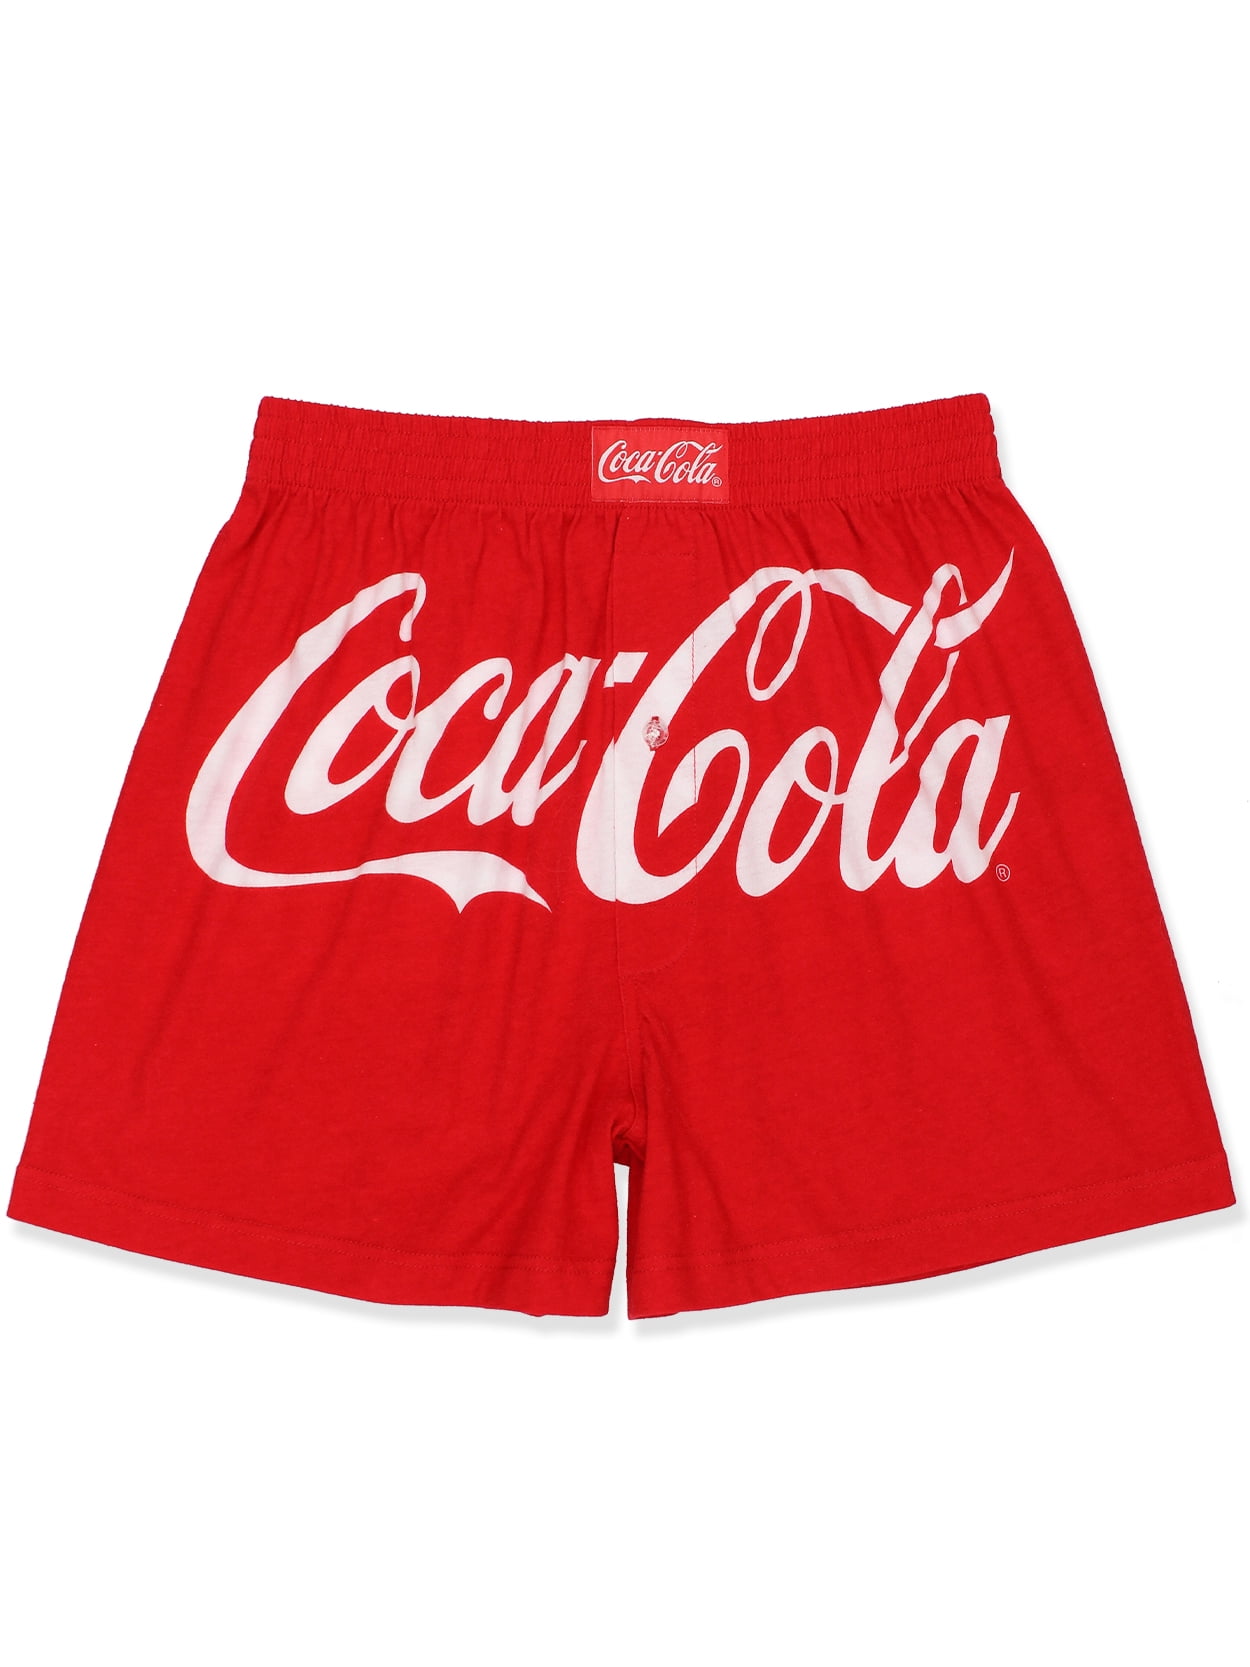 Coca-Cola Mens Novelty Button Fly Cotton Boxer Lounge Shorts 